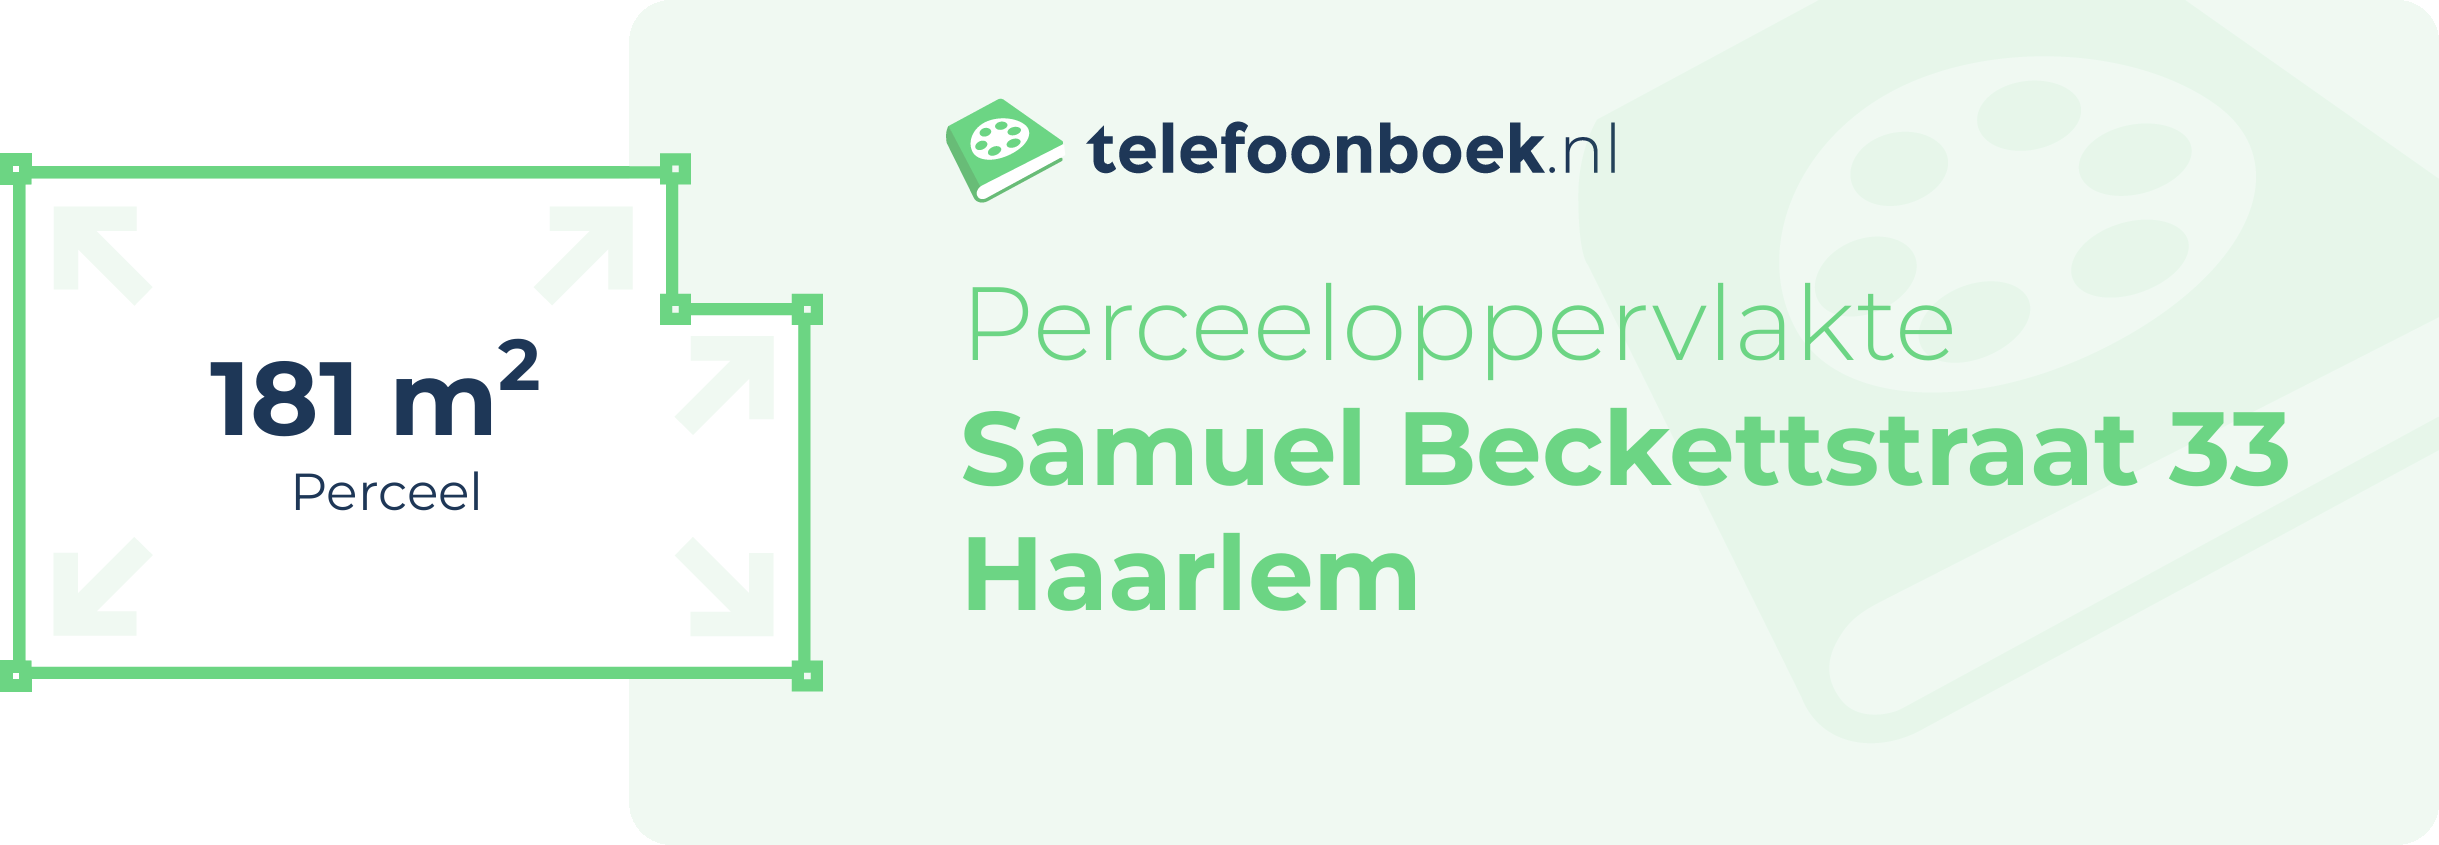 Perceeloppervlakte Samuel Beckettstraat 33 Haarlem